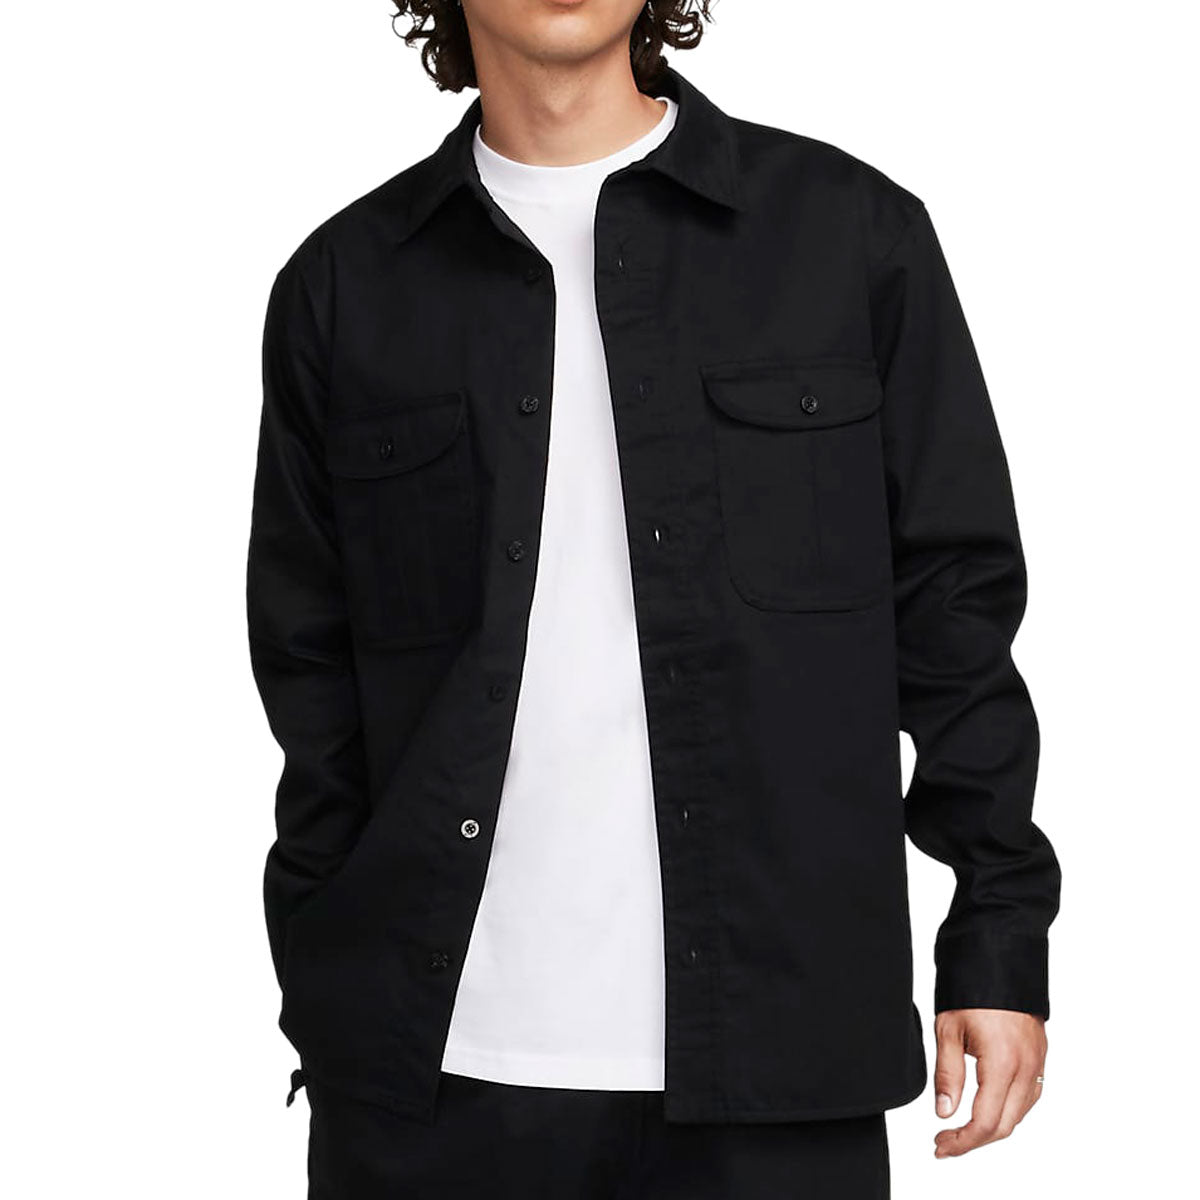 Nike SB Tanglin Button Up Long Sleeve Shirt - Black image 4